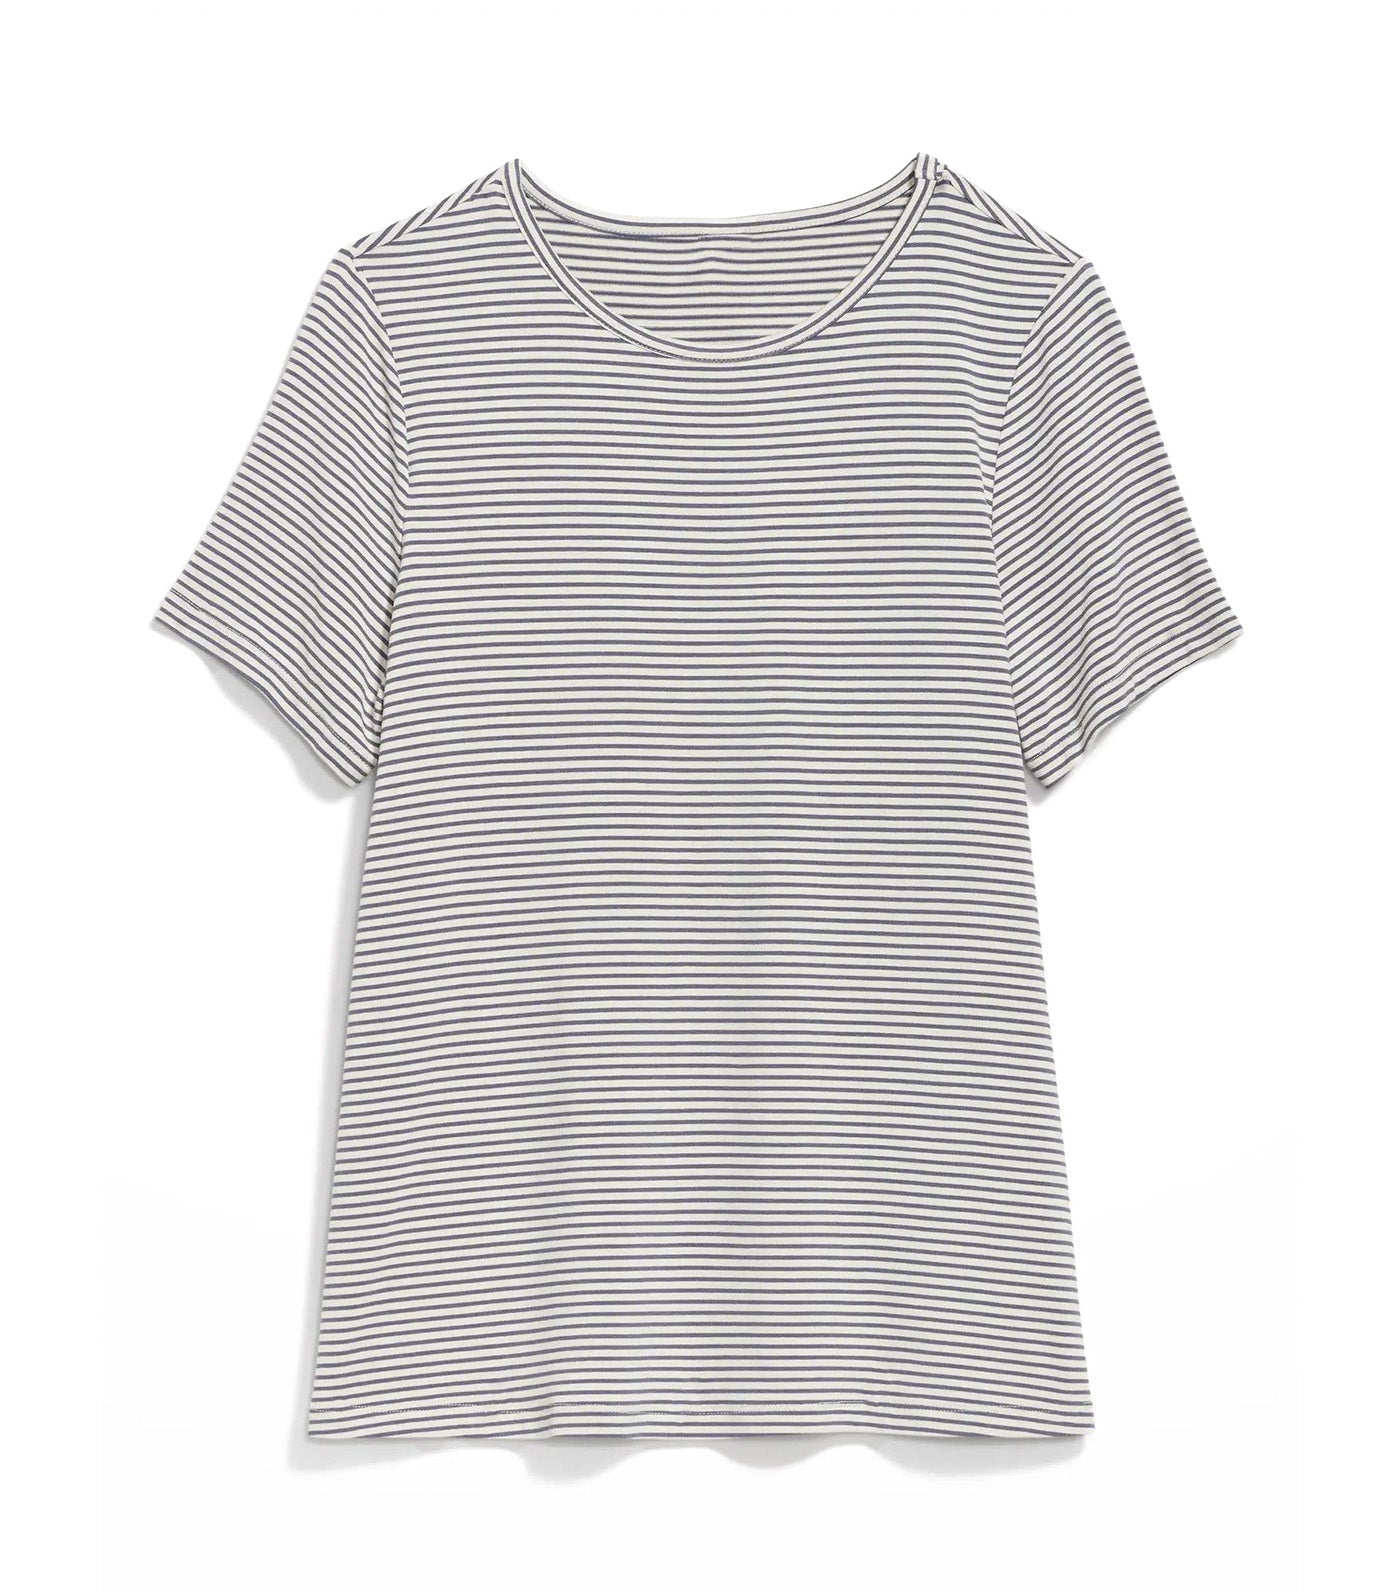 Luxe Striped T-Shirt For Women White/Blue Stripe